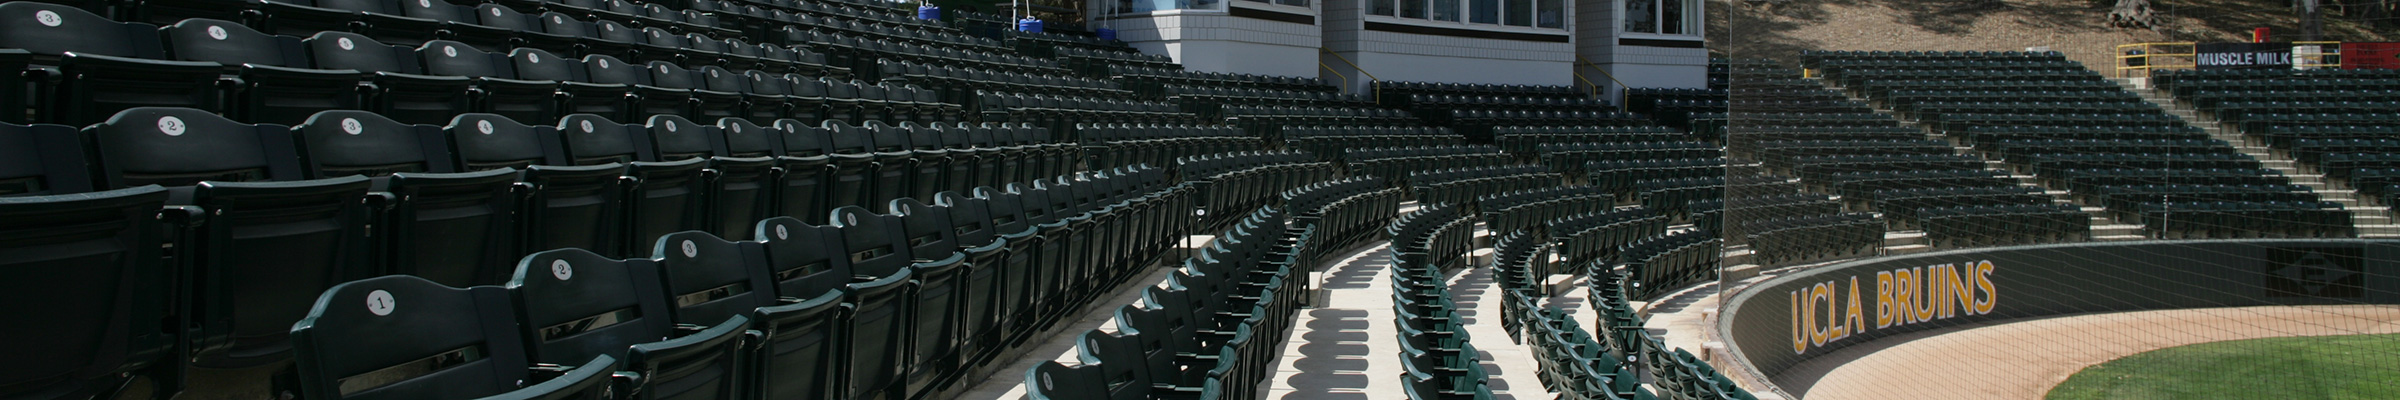 Jackie Robinson Field spectator seating